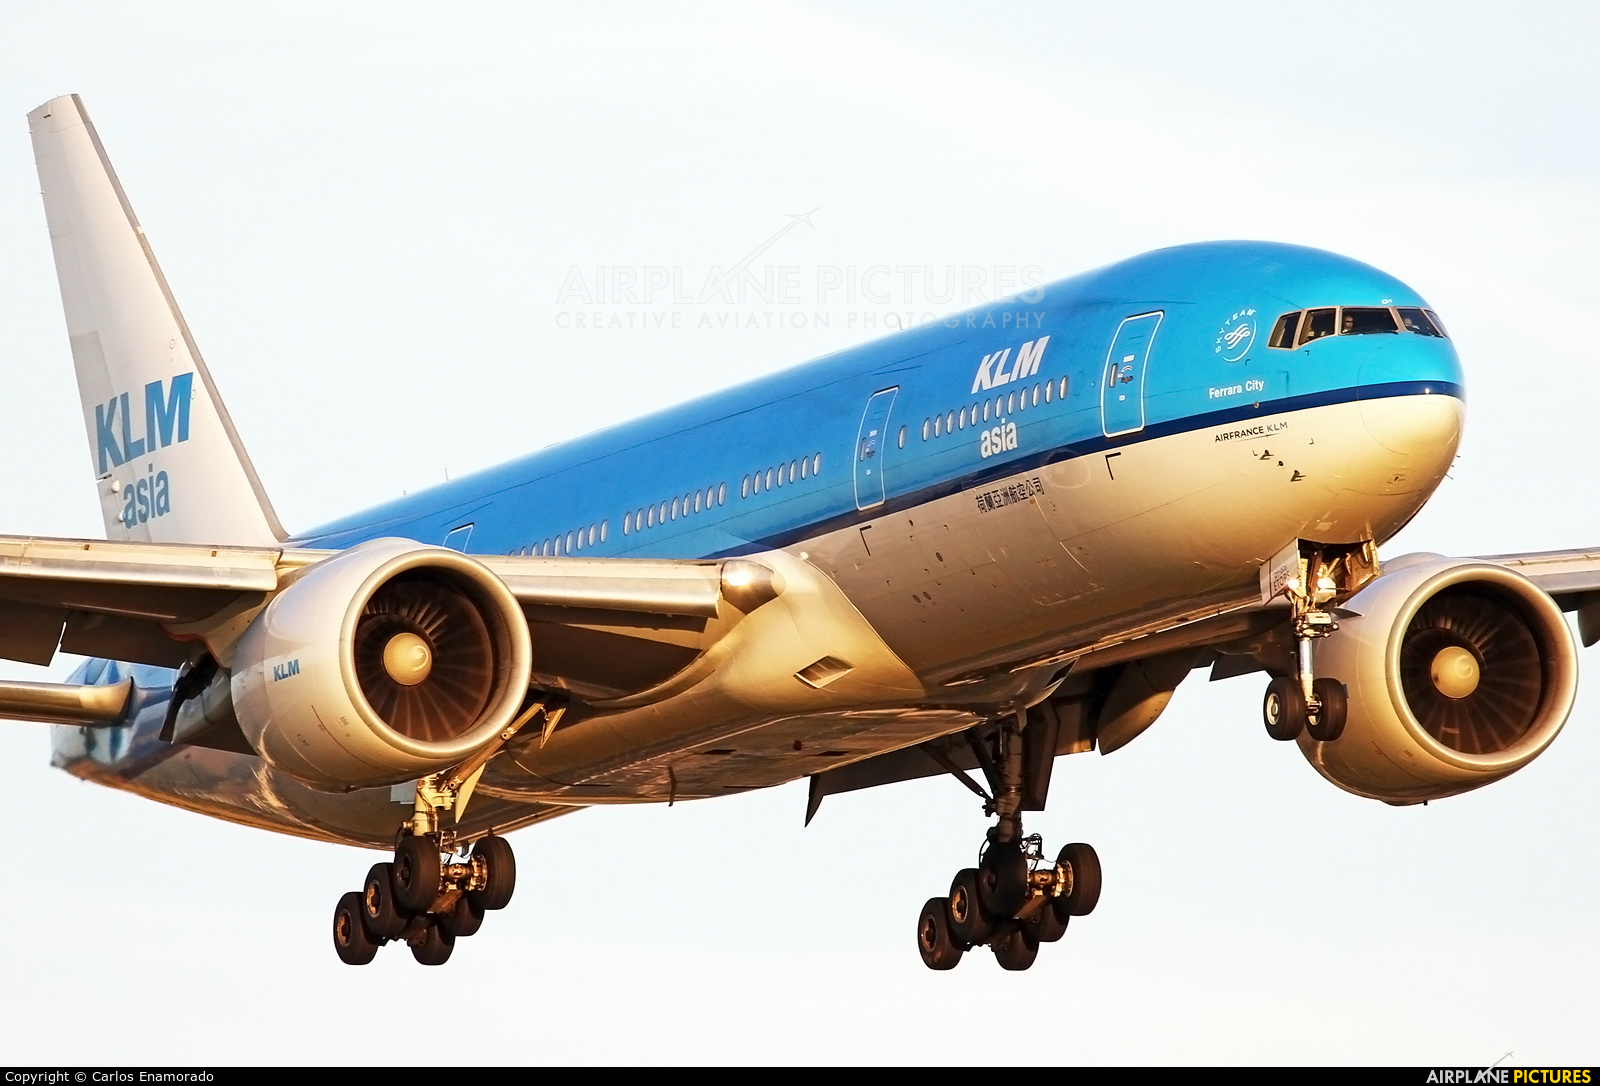 KLM Asia PH-BQF aircraft at Amsterdam - Schiphol